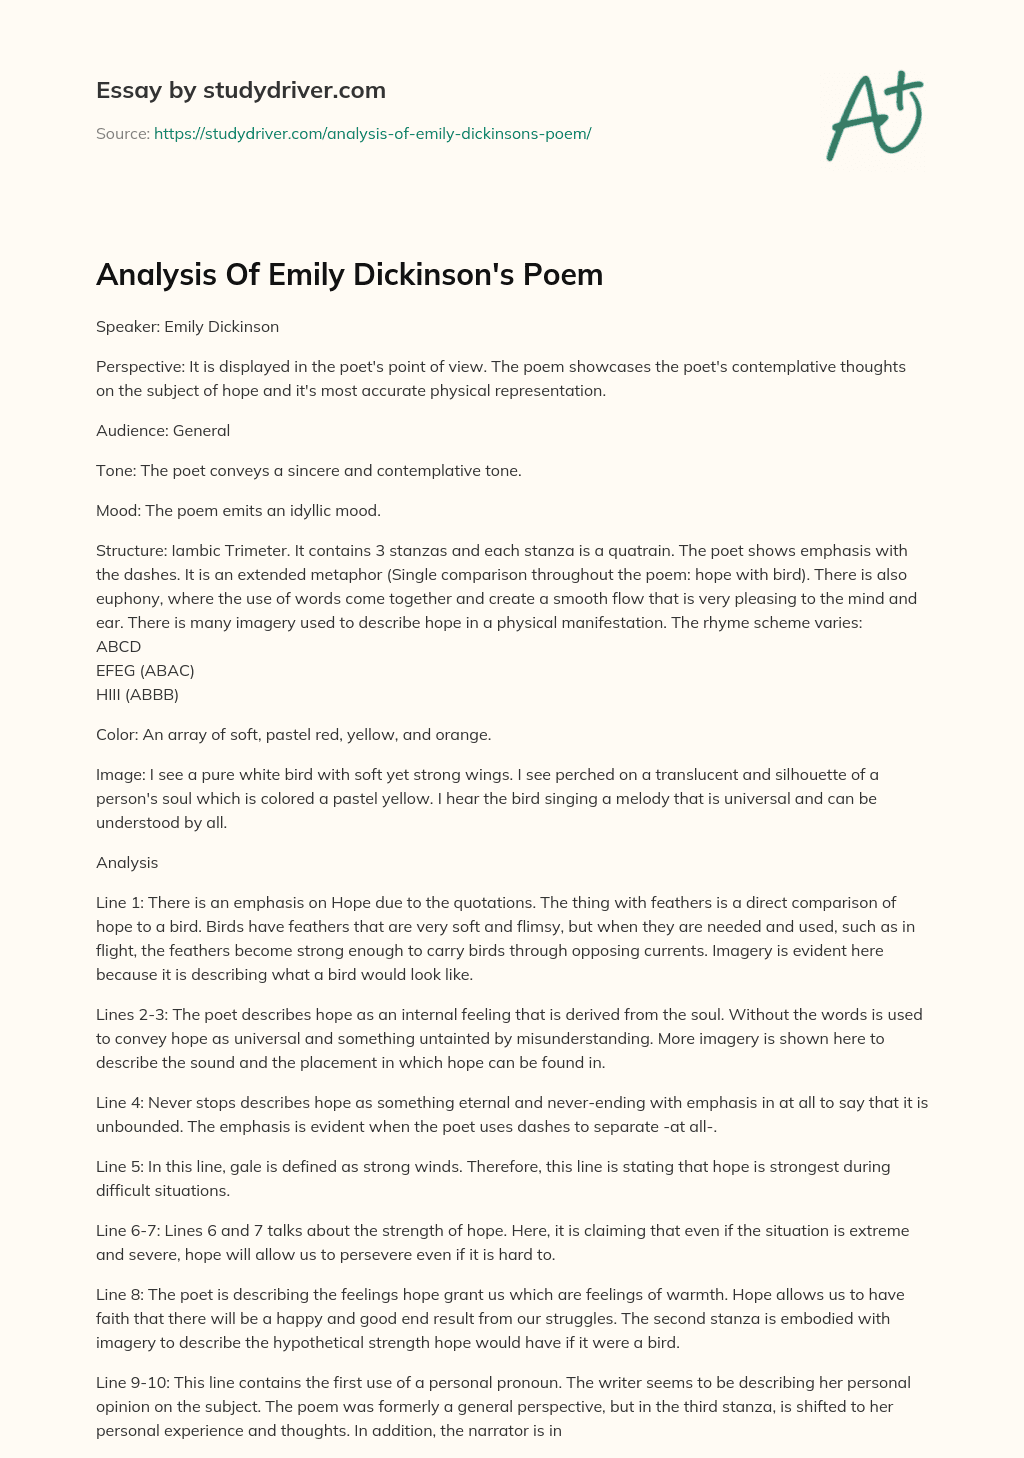 Analysis of Emily Dickinson’s Poem essay